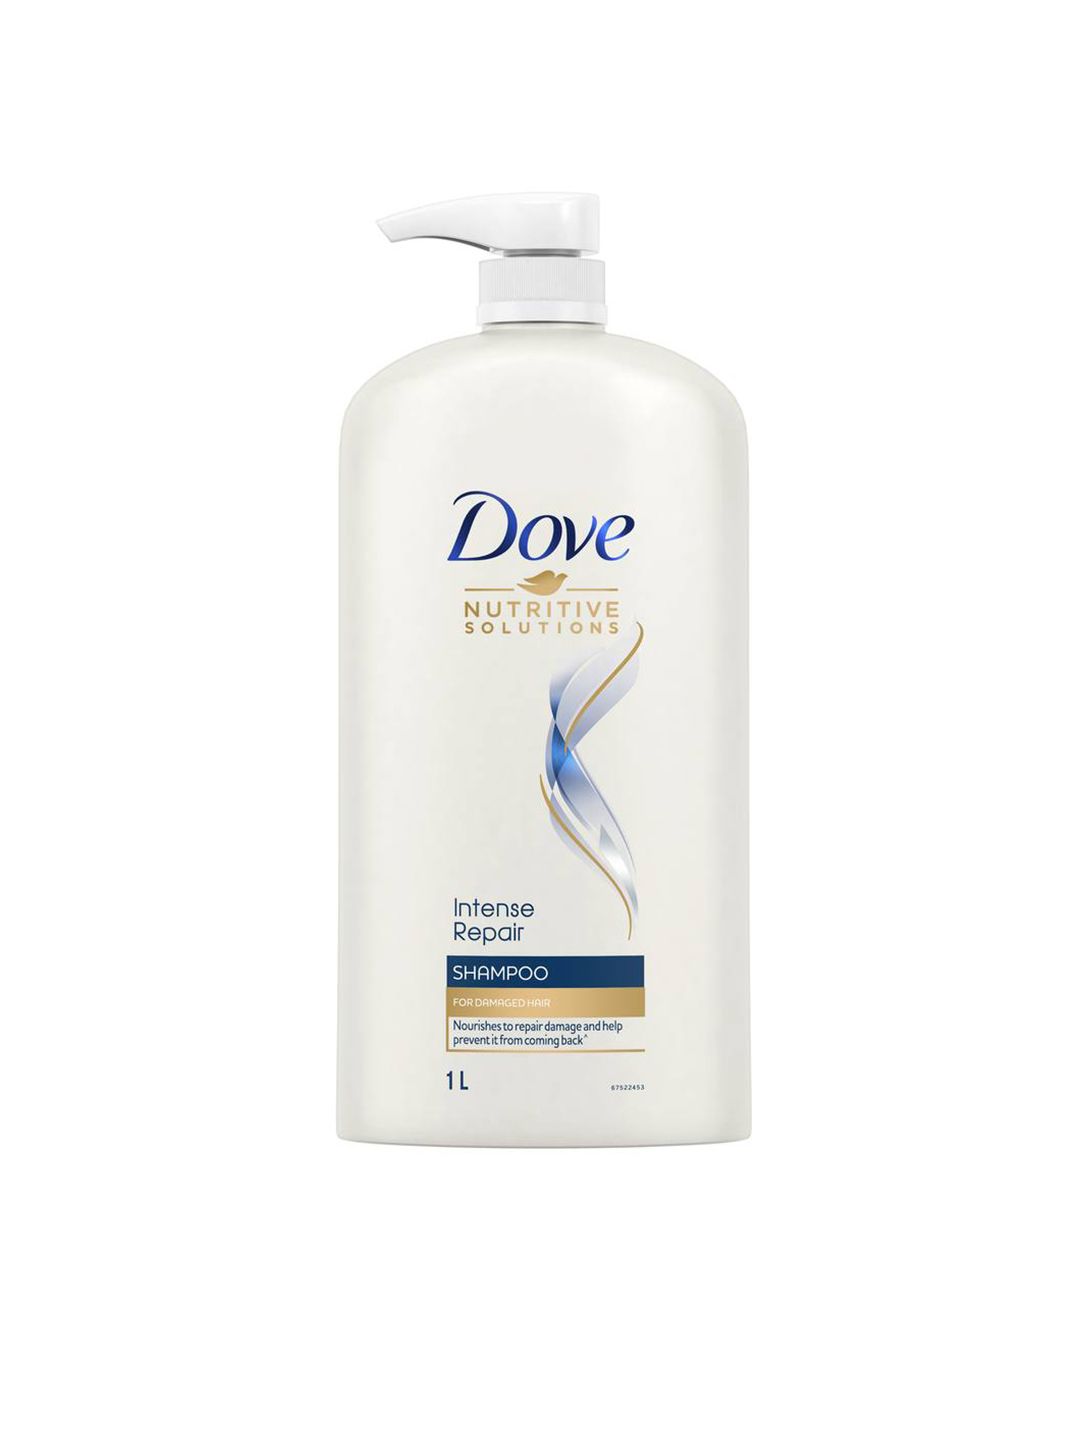 Dove Intense Repair Shampoo 1 l Price in India